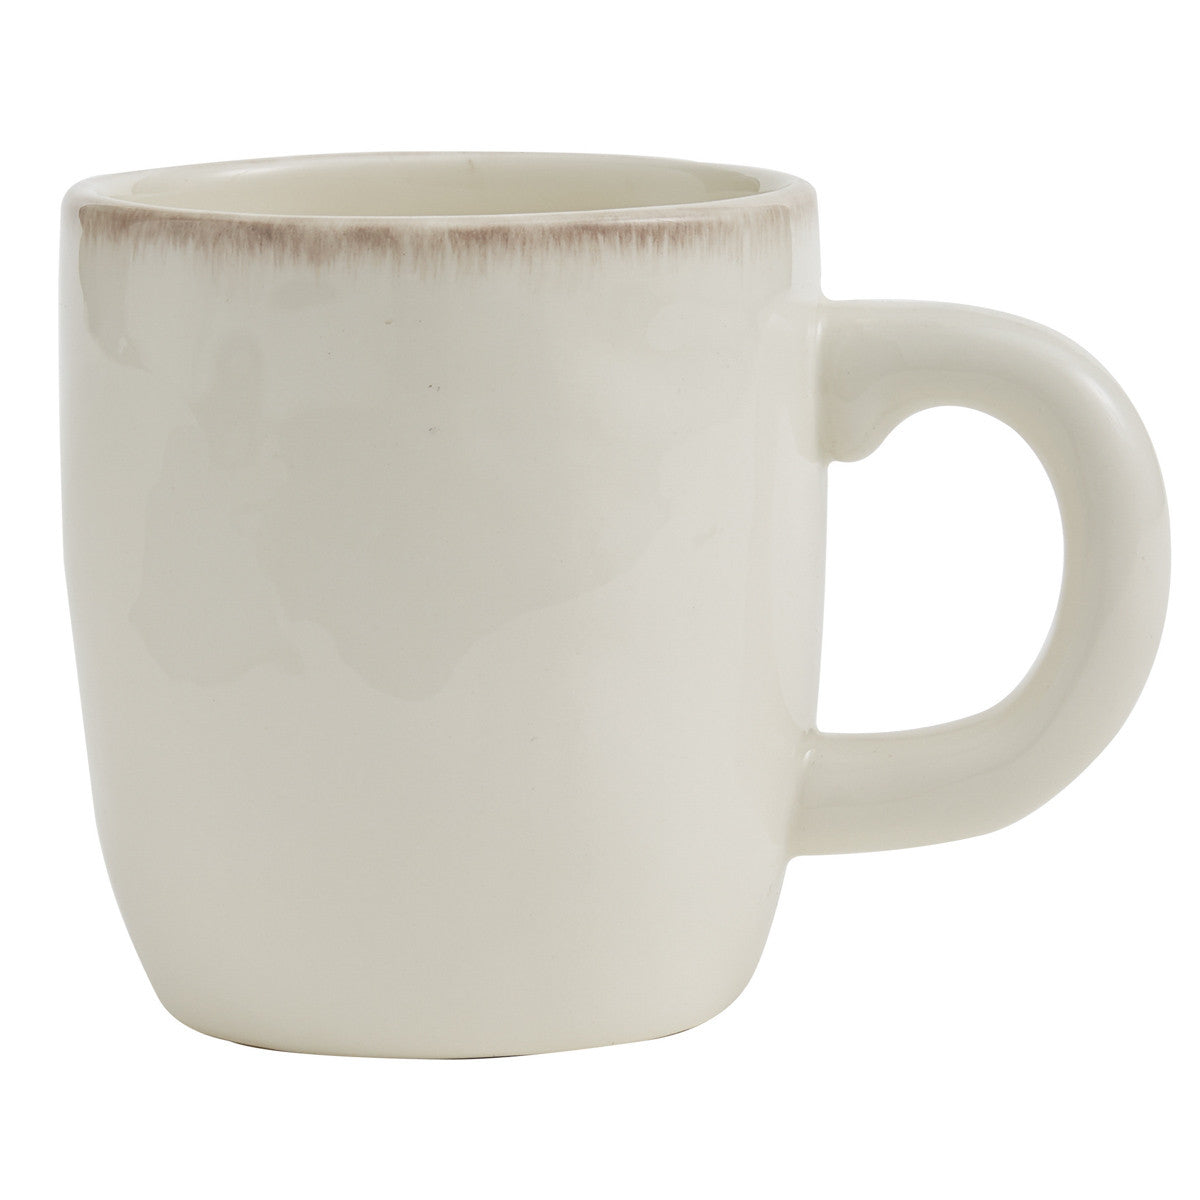 Village mug - plain - Cream - Set of 4